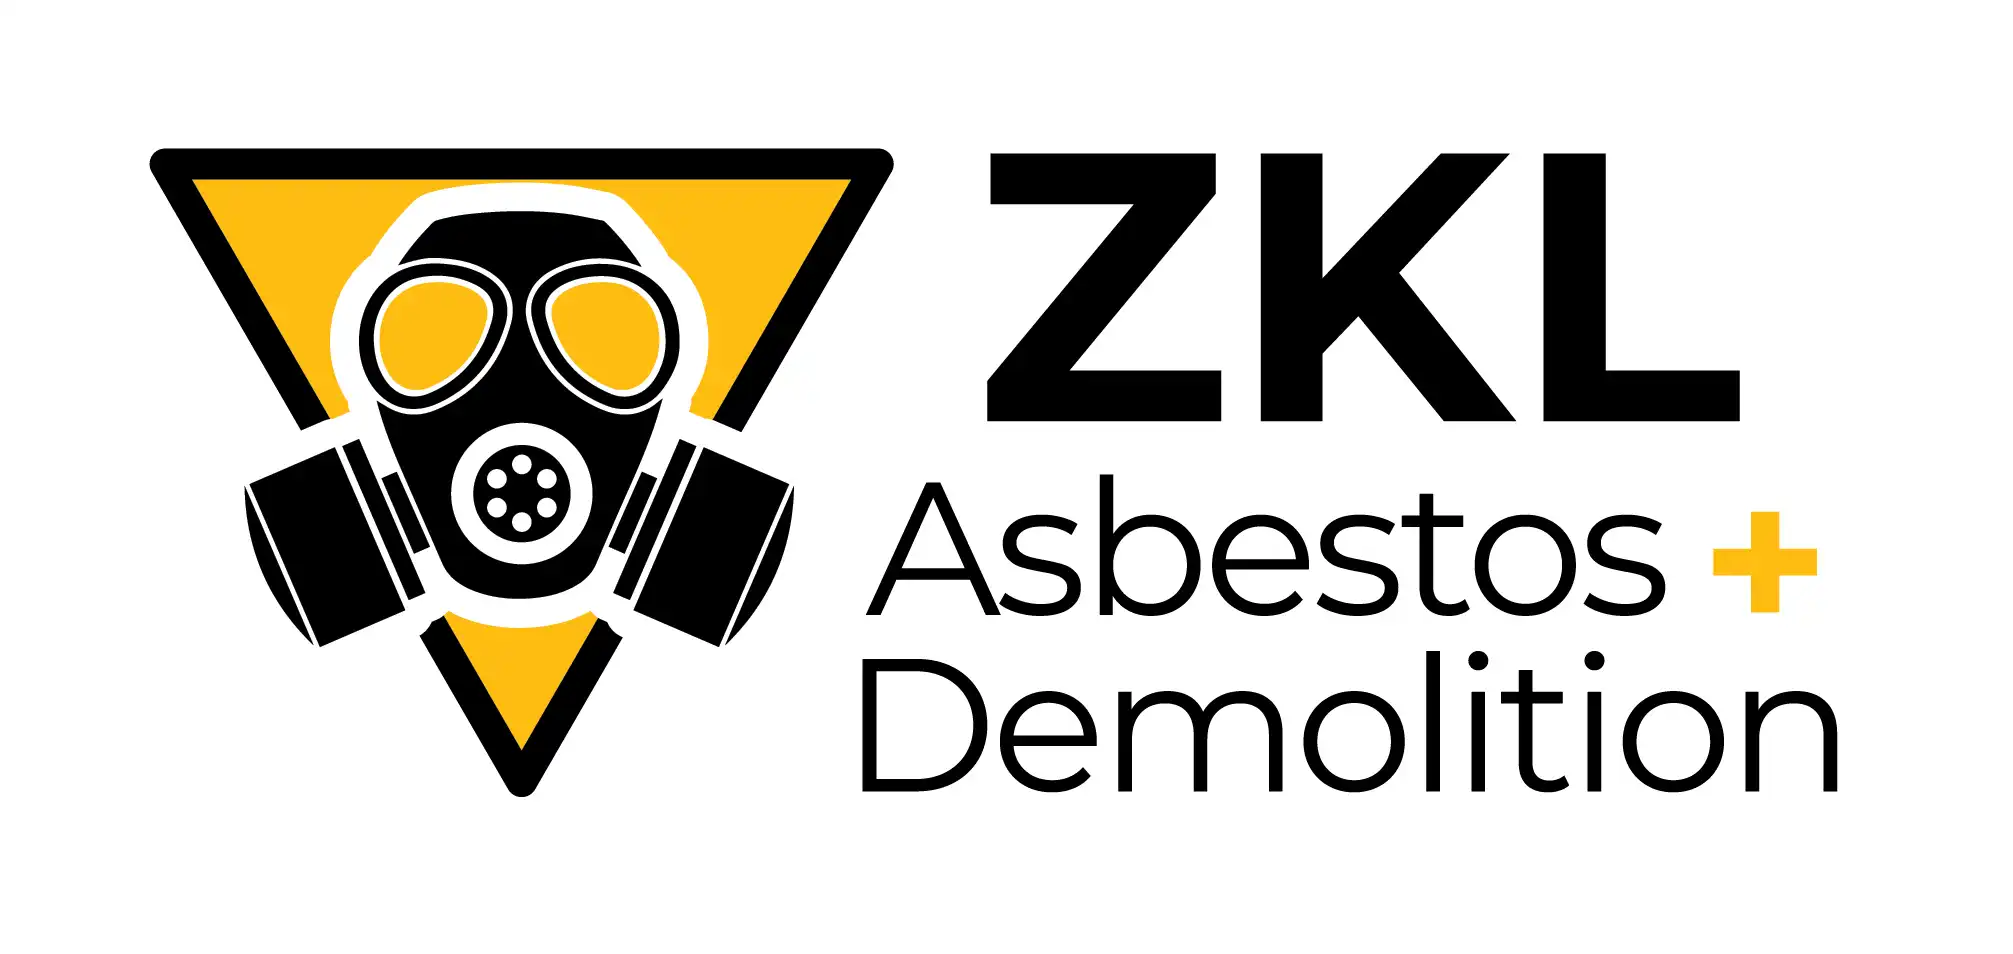 ZKL Asbestos + Demolition